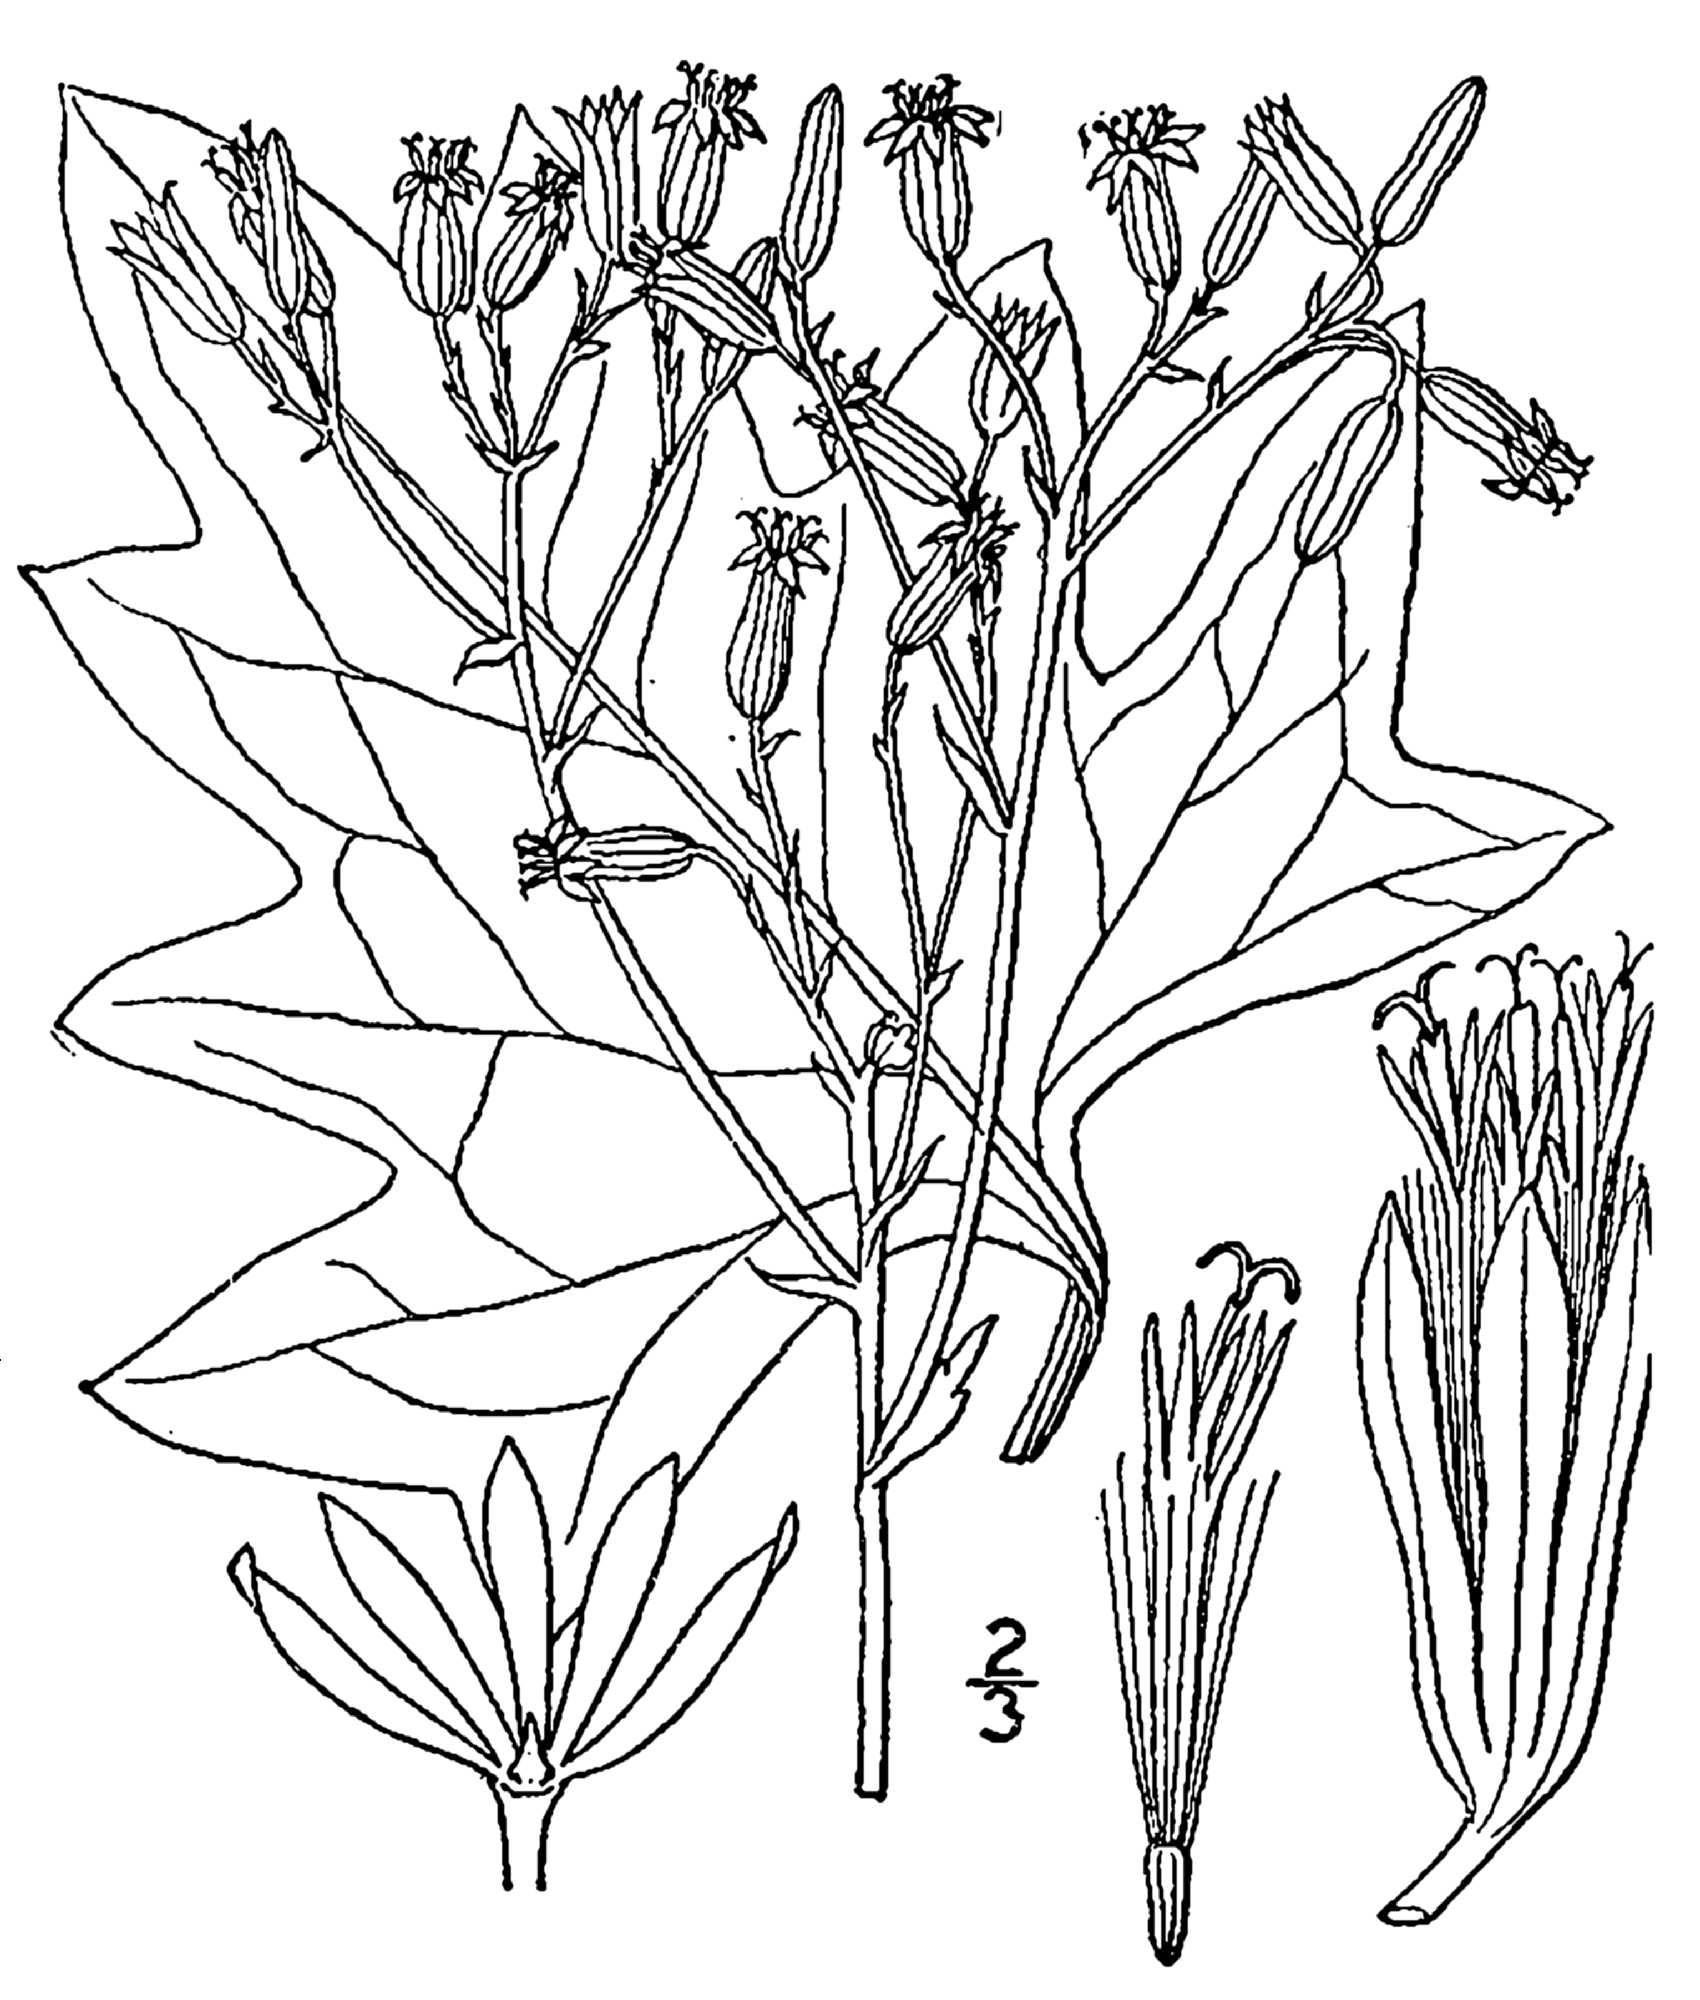 1913 Pale Indian Plantain illustration.